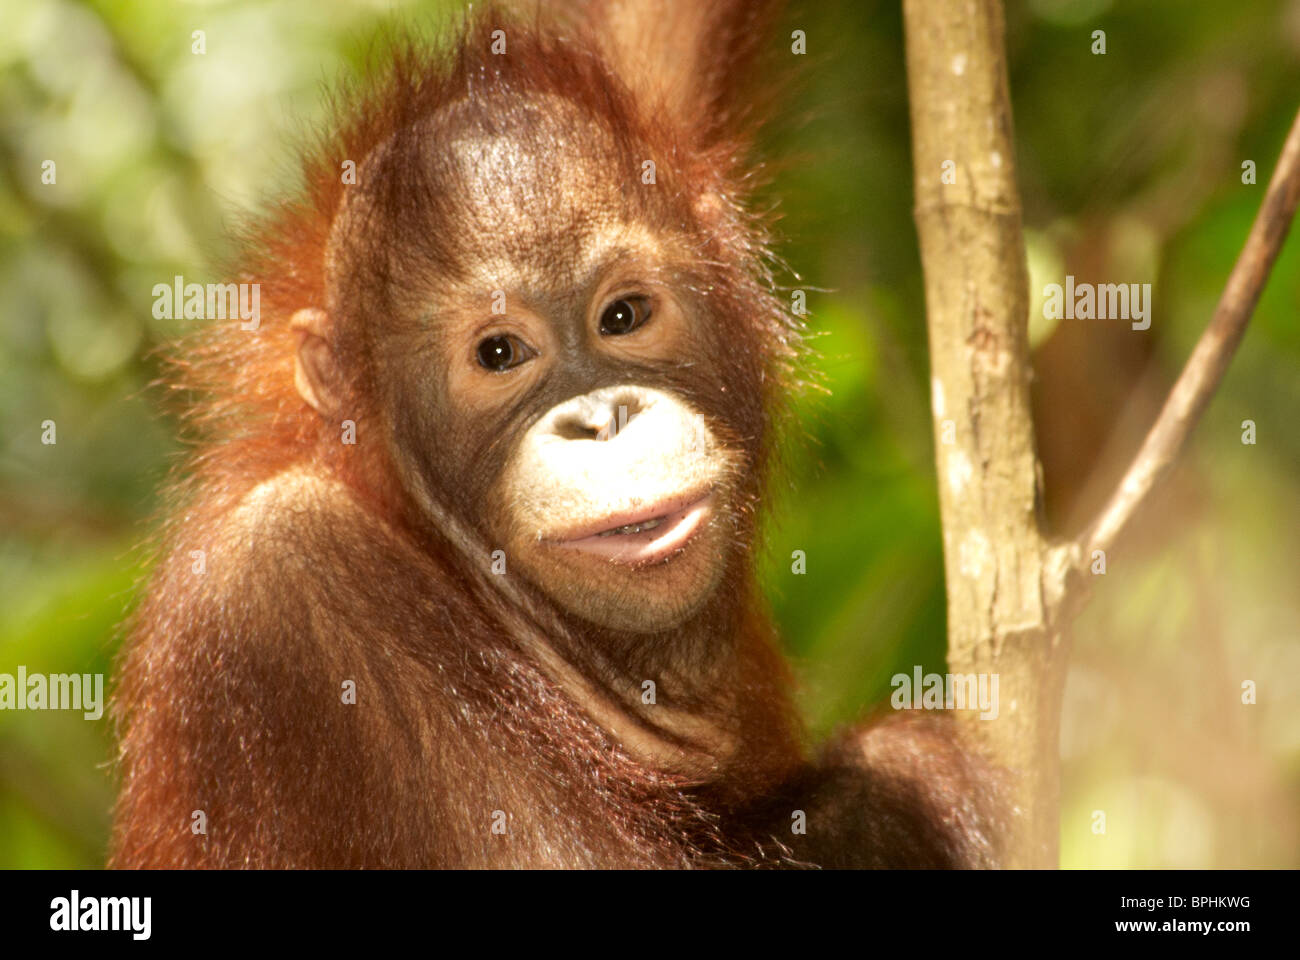 orang utang with expressive face Stock Photo